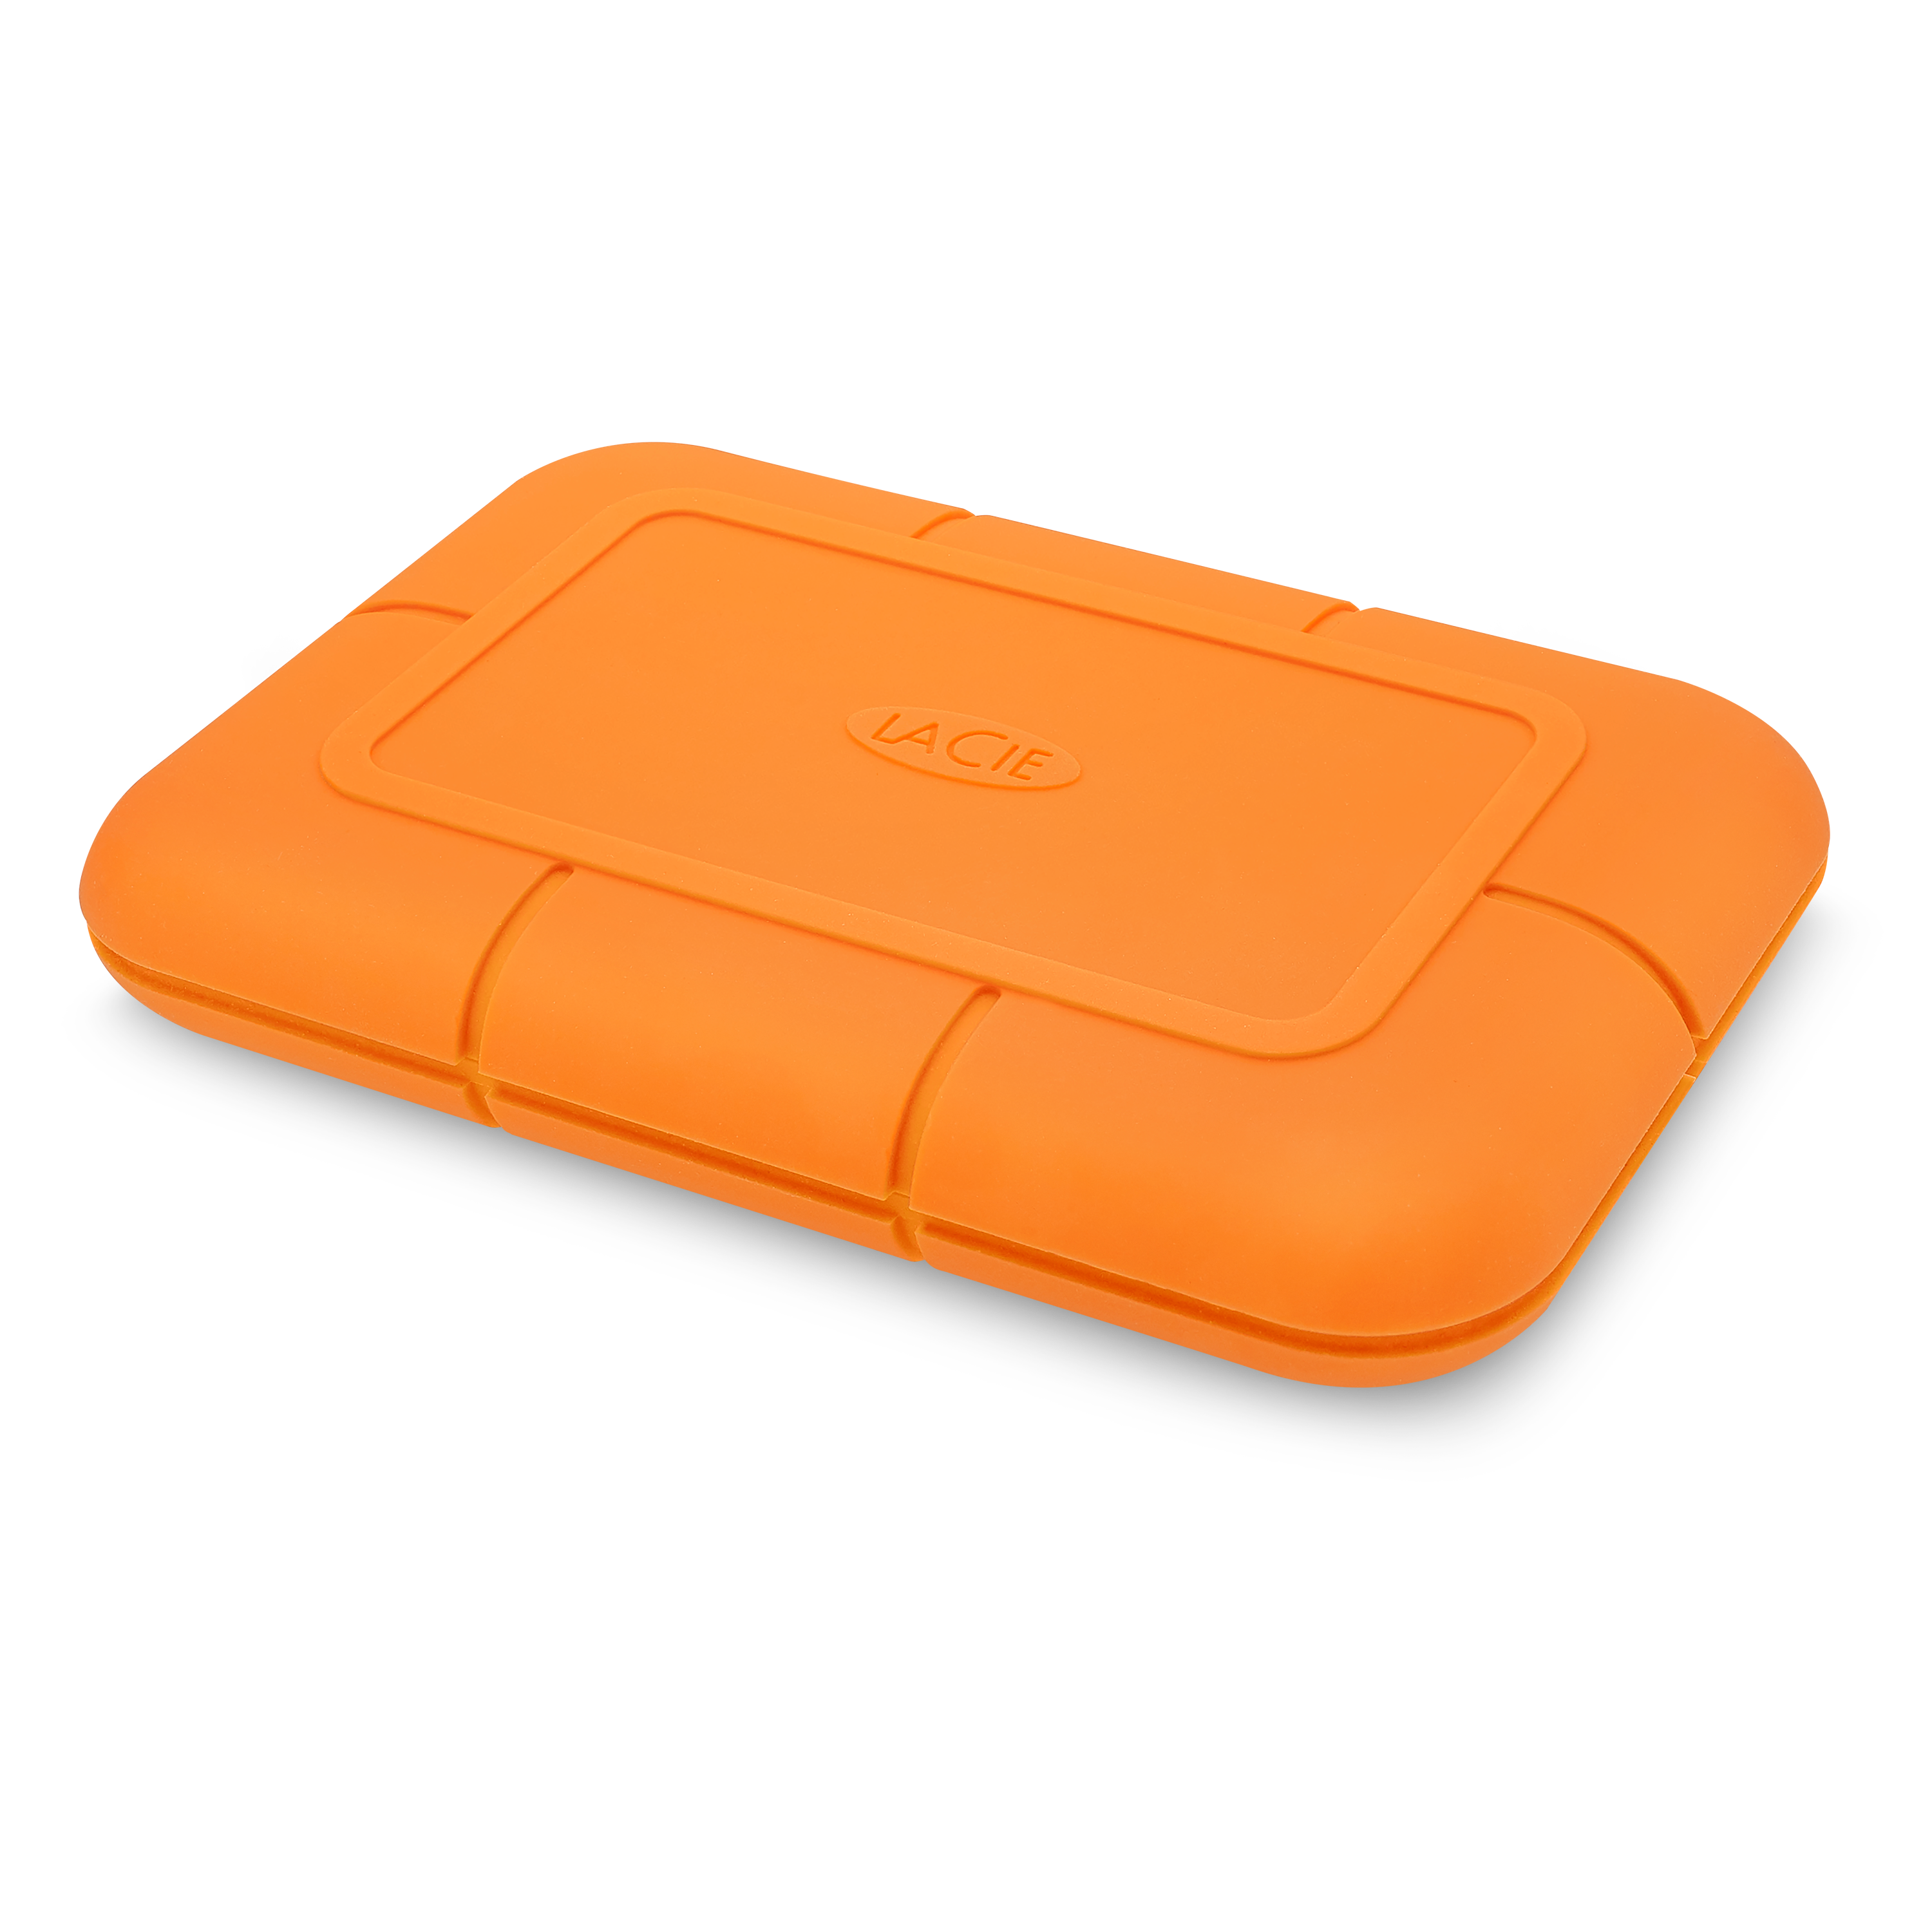 LACIE Rugged SSD Orange GB extern, Festplatte, SSD, 500